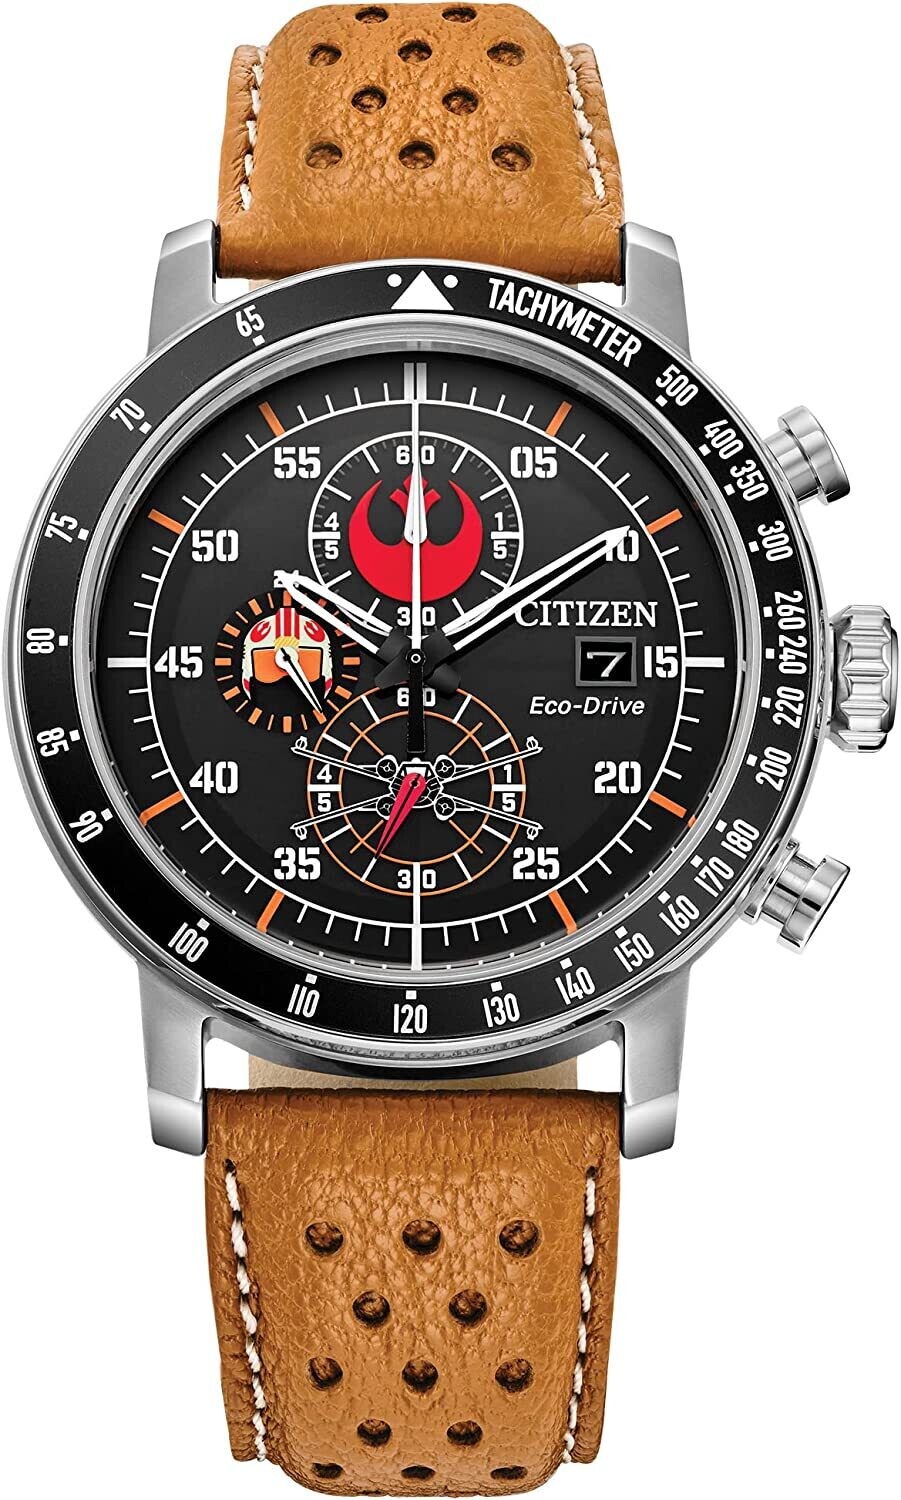 Reloj hombre aviador Citizen Star Wars Rebel Pilot CA0761-06W 44mm dial negro correa de cuero 100m